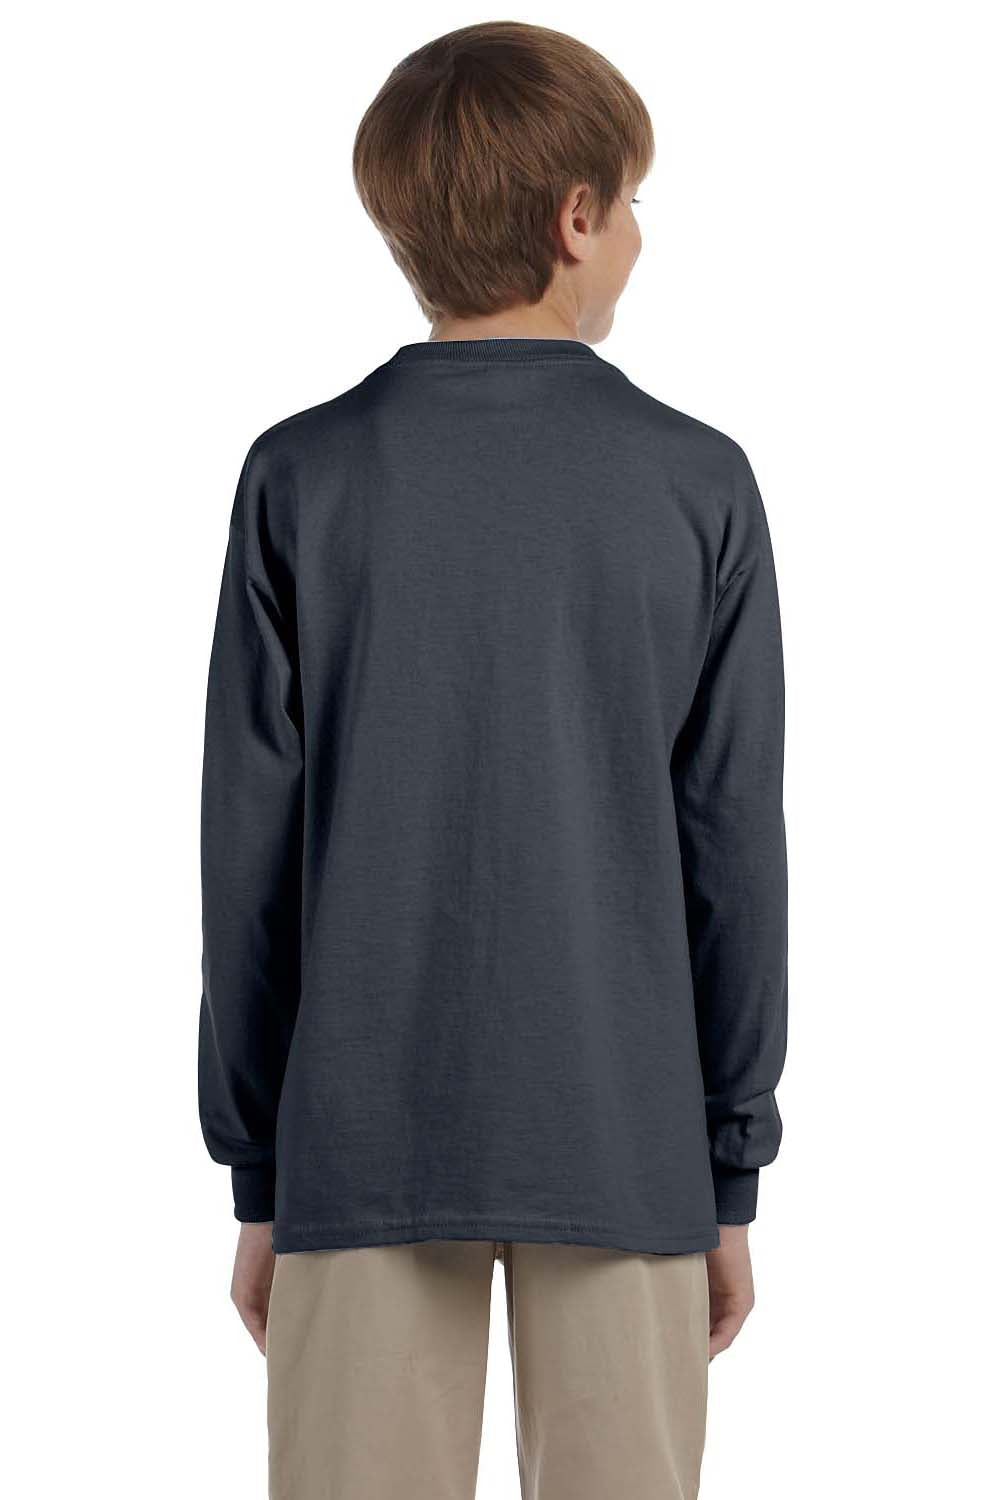 Gildan G240B Youth Ultra Long Sleeve Crewneck T-Shirt Charcoal Grey Back